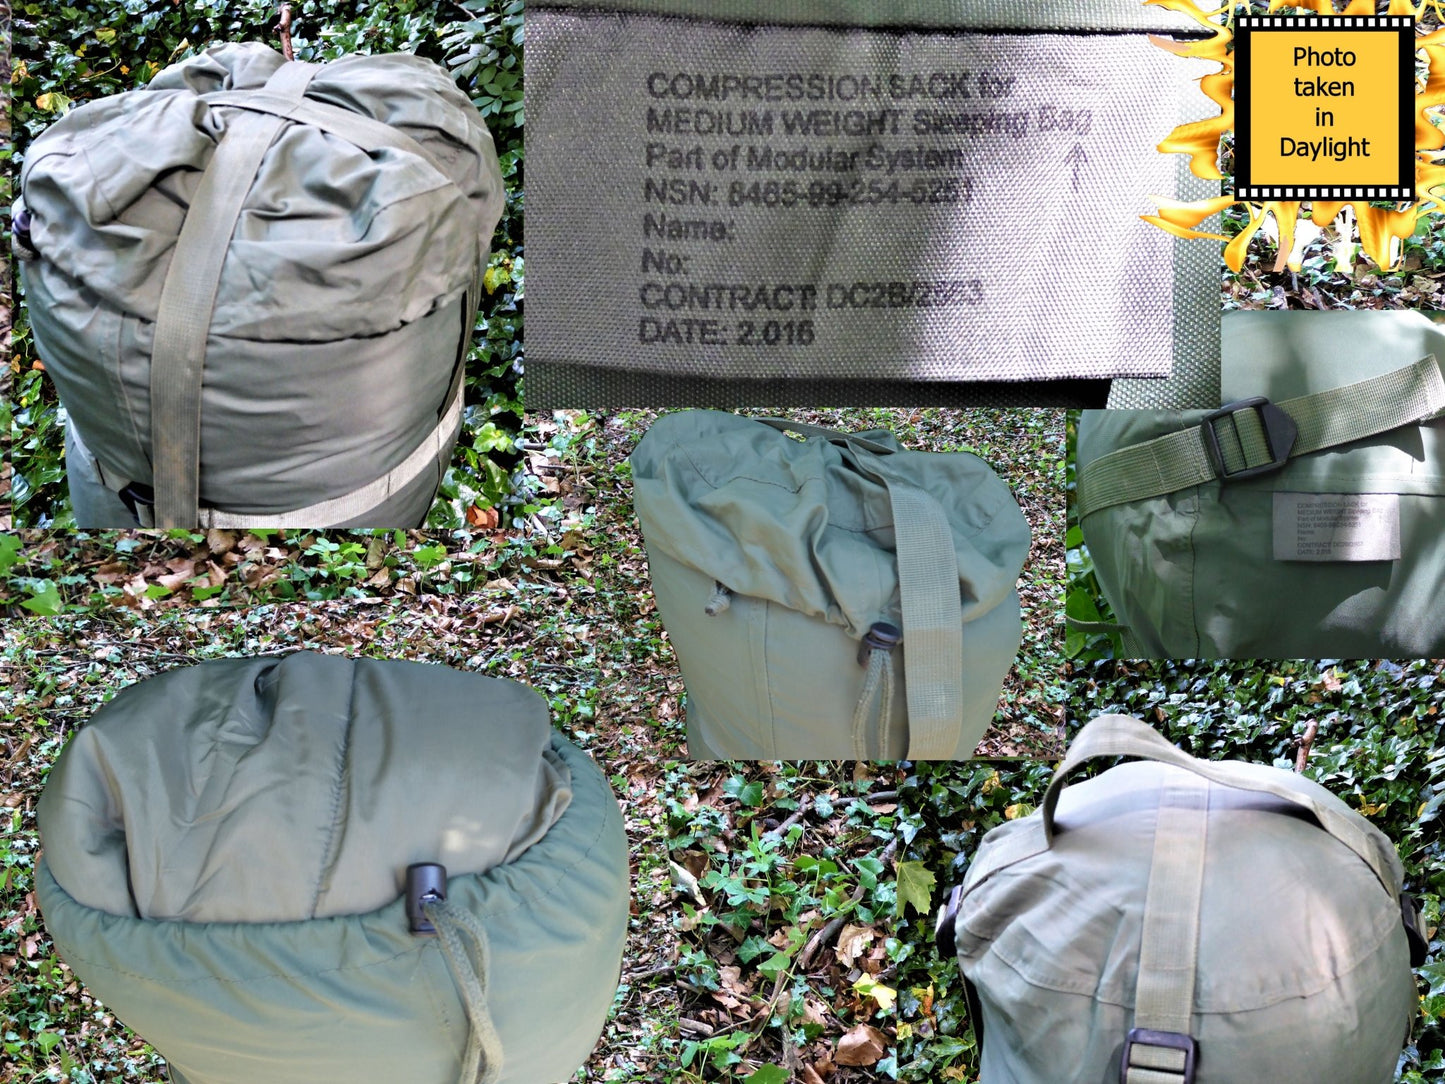 Army Surplus Compression Sack for Medium Sleeping Bag Compression Sack Huggins Attic    [Huggins attic]